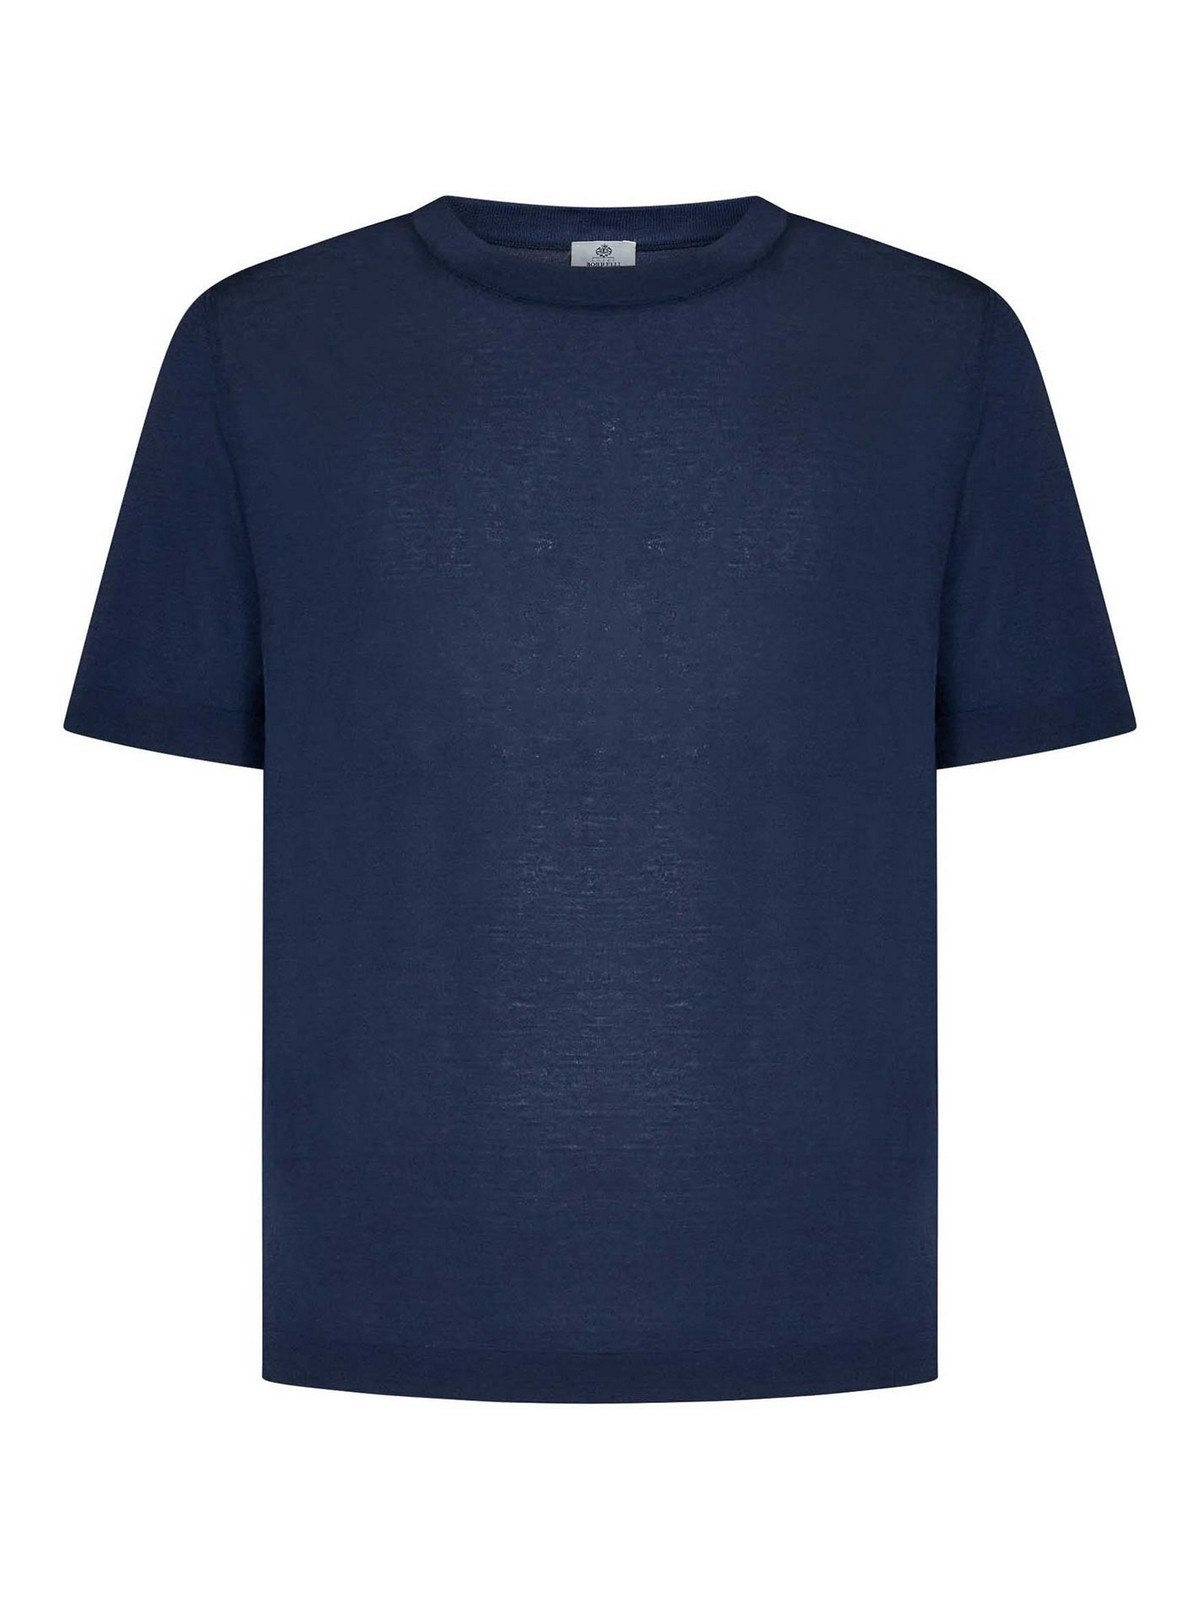 Luigi Borrelli Crew-neck T-shirt In Navy Blue Cotton Jersey